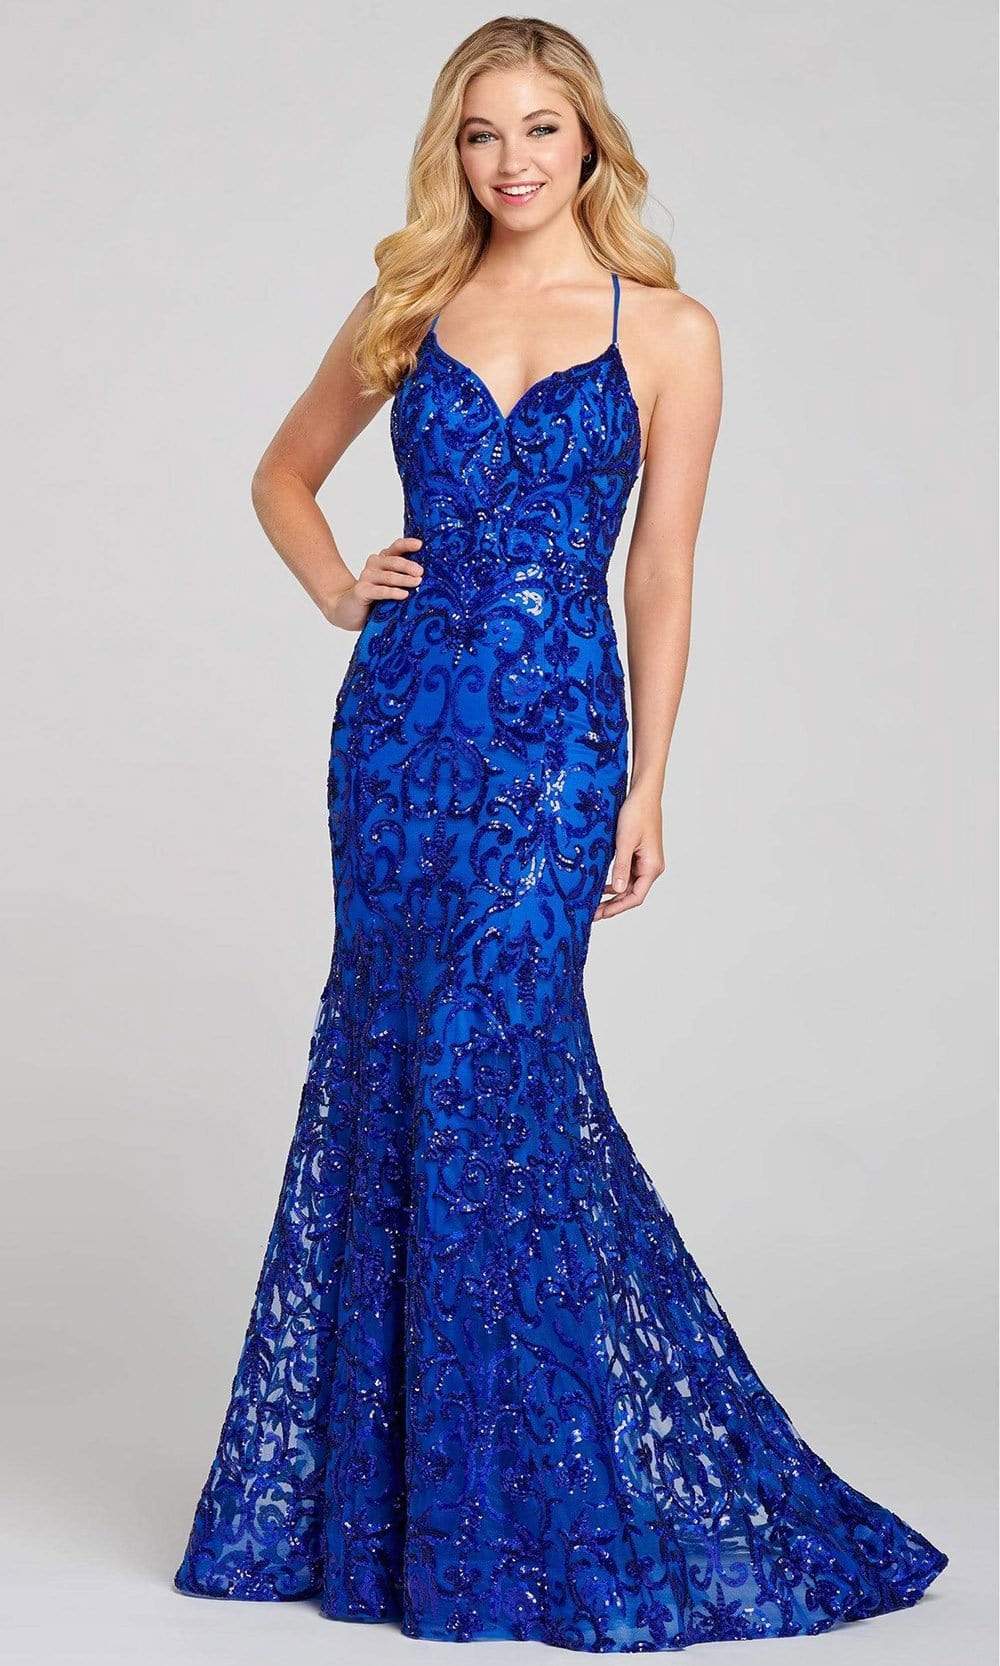 Colette for Mon Cheri - CL12130 Spaghetti Strap Sequined Mermaid Gown Evening Dresses 00 / Cobalt Blue